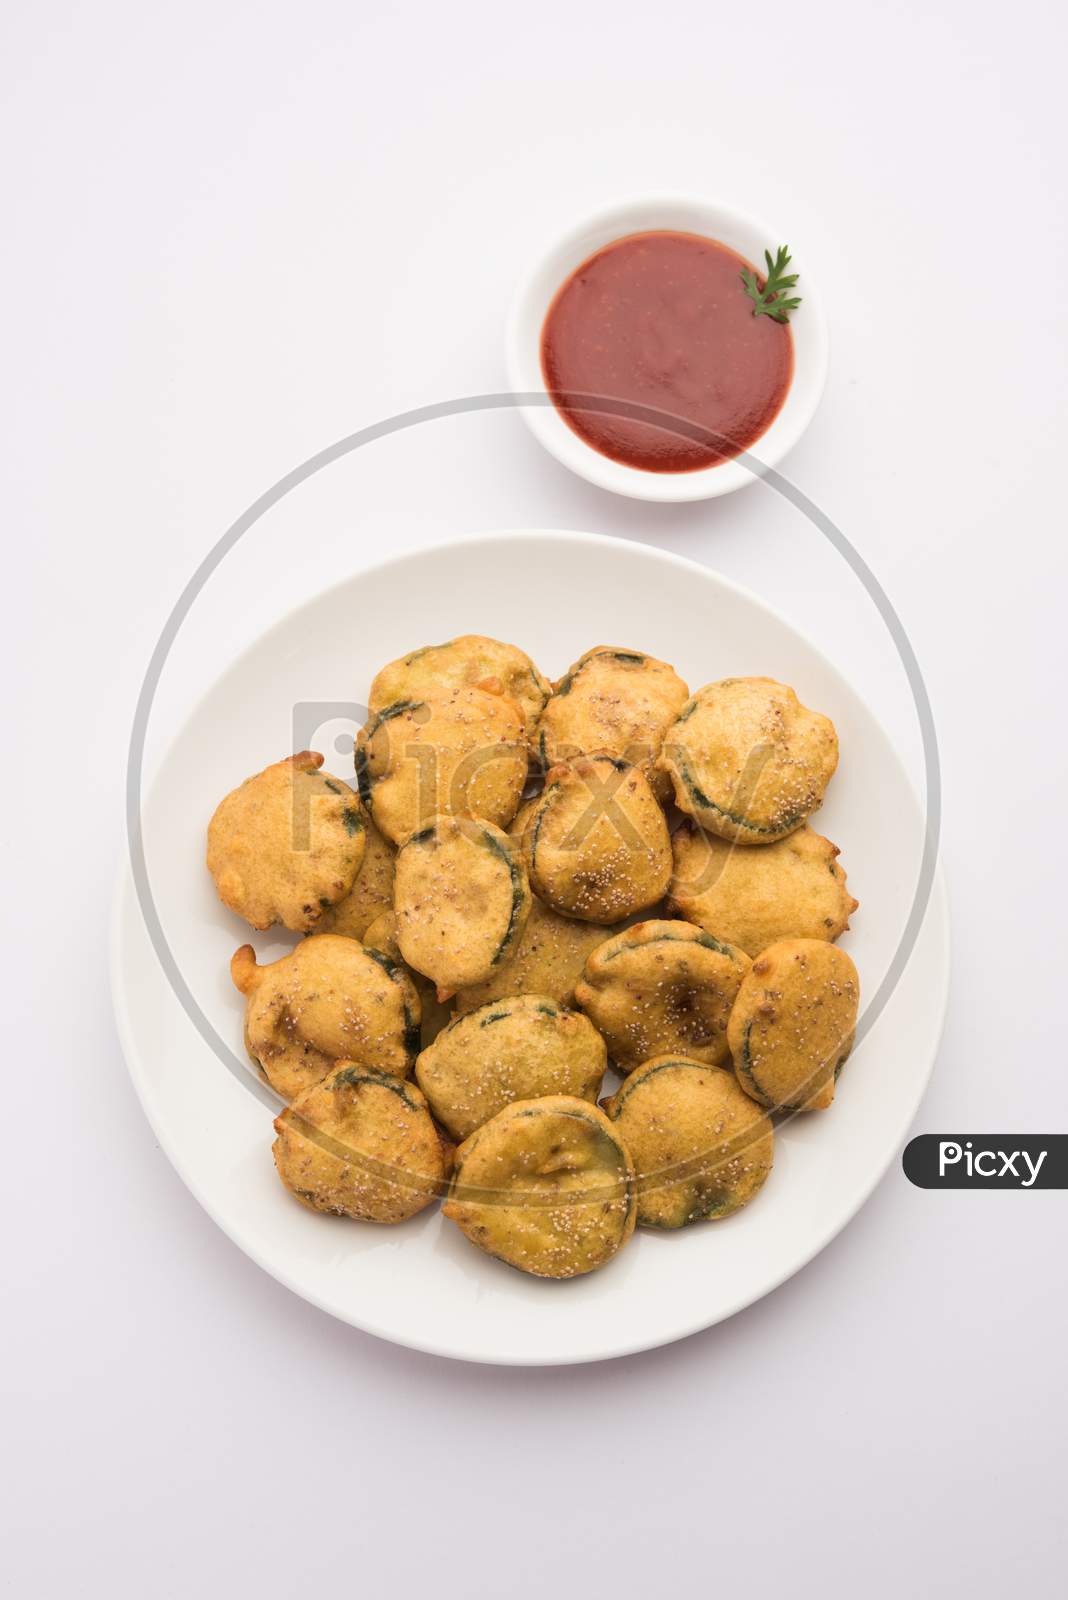 Gilki Pakora /Pakoda / Bhajji Also Known As Sponge Gourd Fritters, Served With Tomato Ketchup